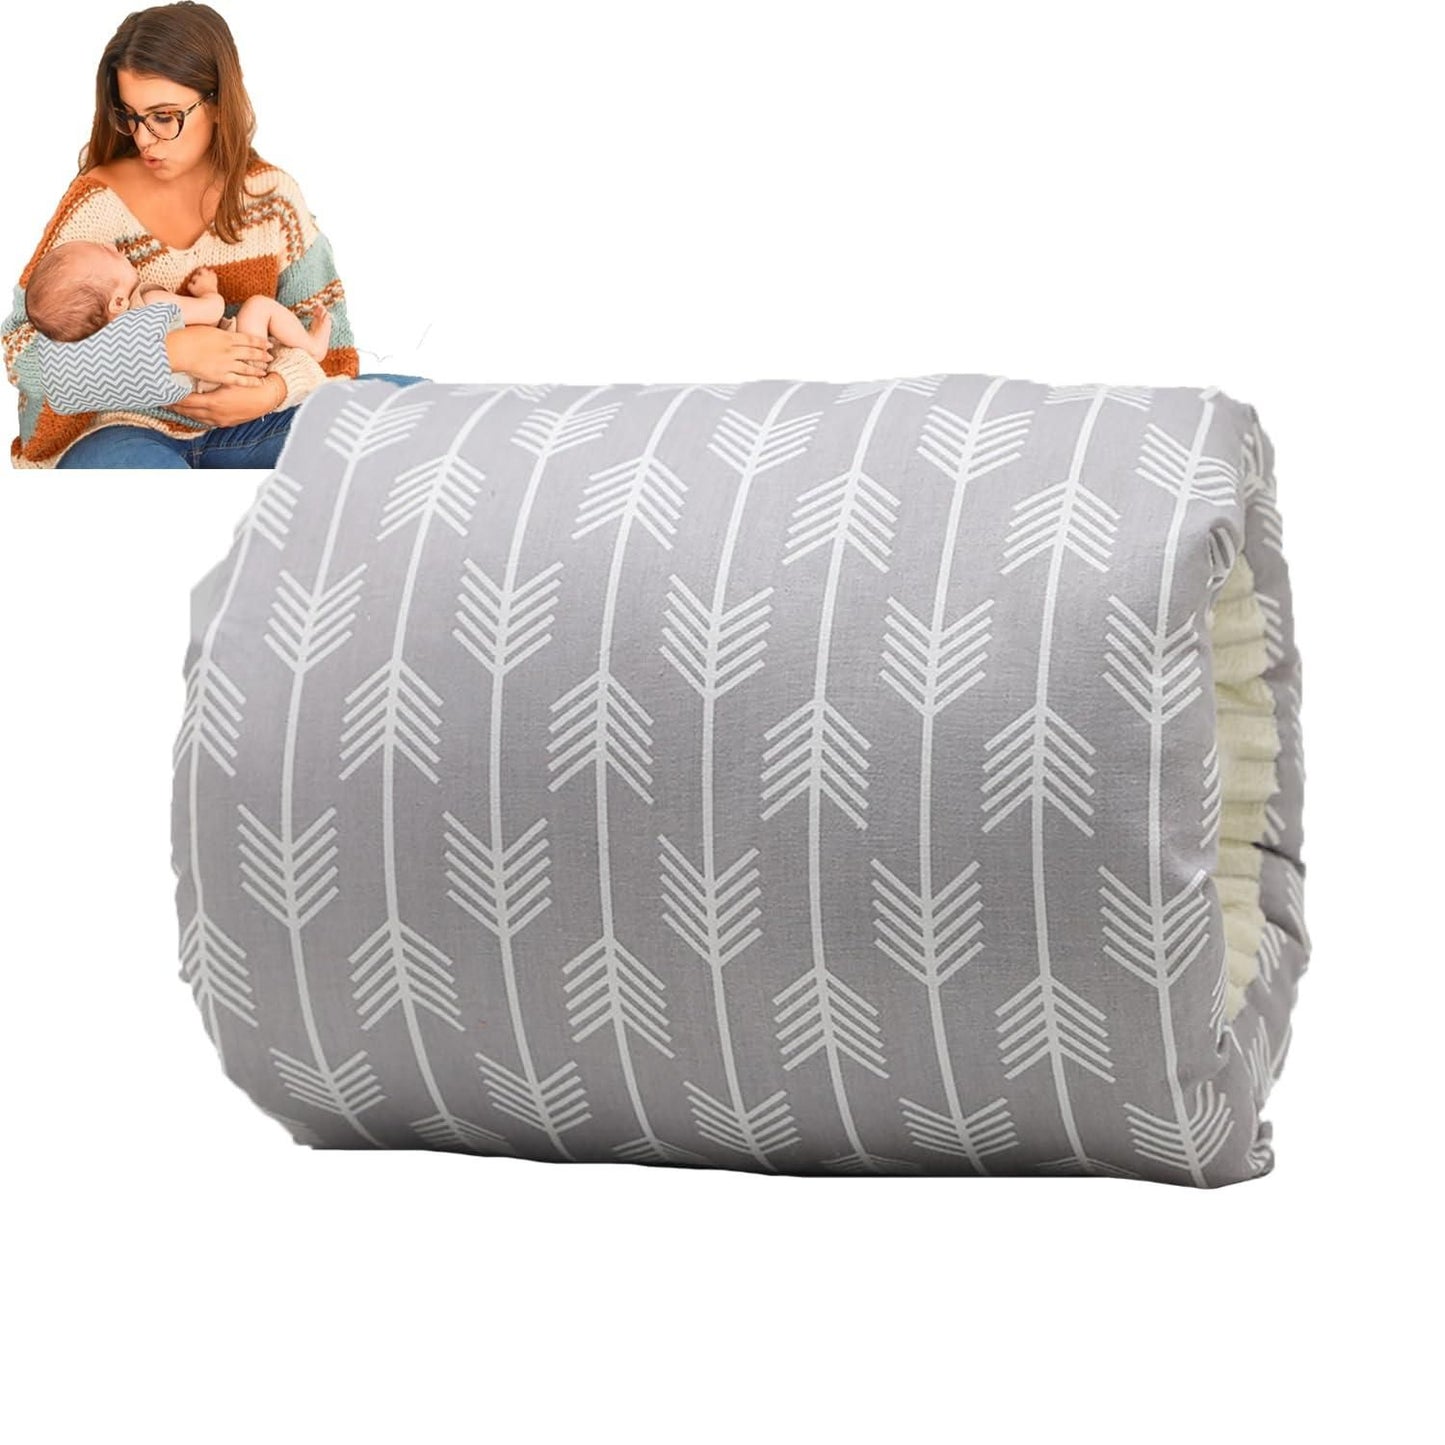 Cozie Cradle Baby Pillow, Cozie Cradle Baby Nursing Pillow, Cozy Cradle Pillow-Feeding Pillow